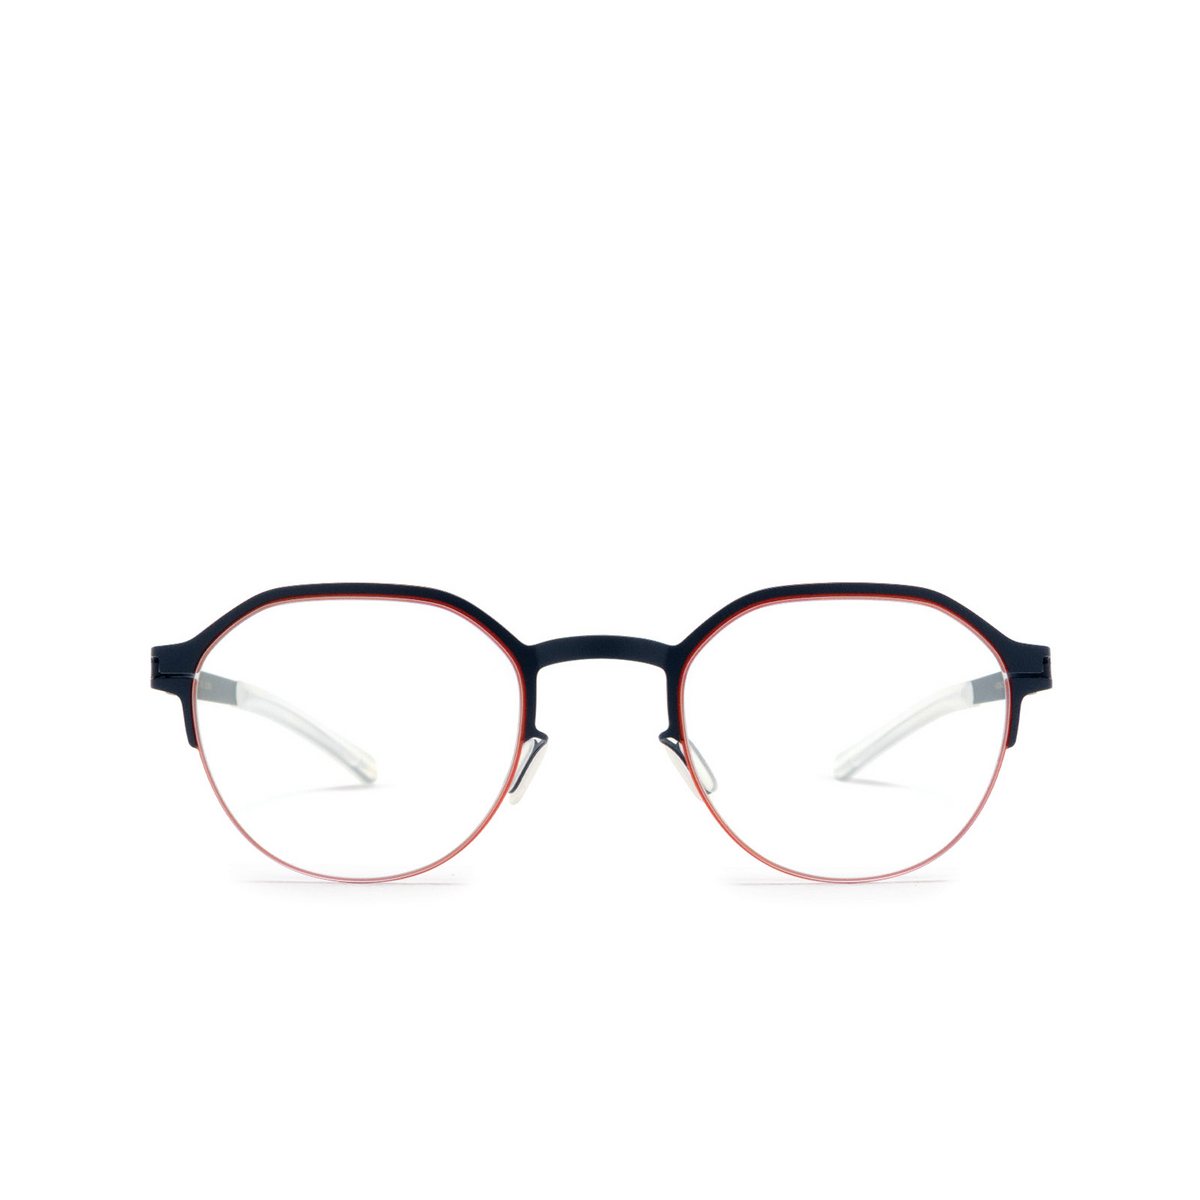 Mykita DORIAN Eyeglasses 542 Navy/Rusty Red - front view